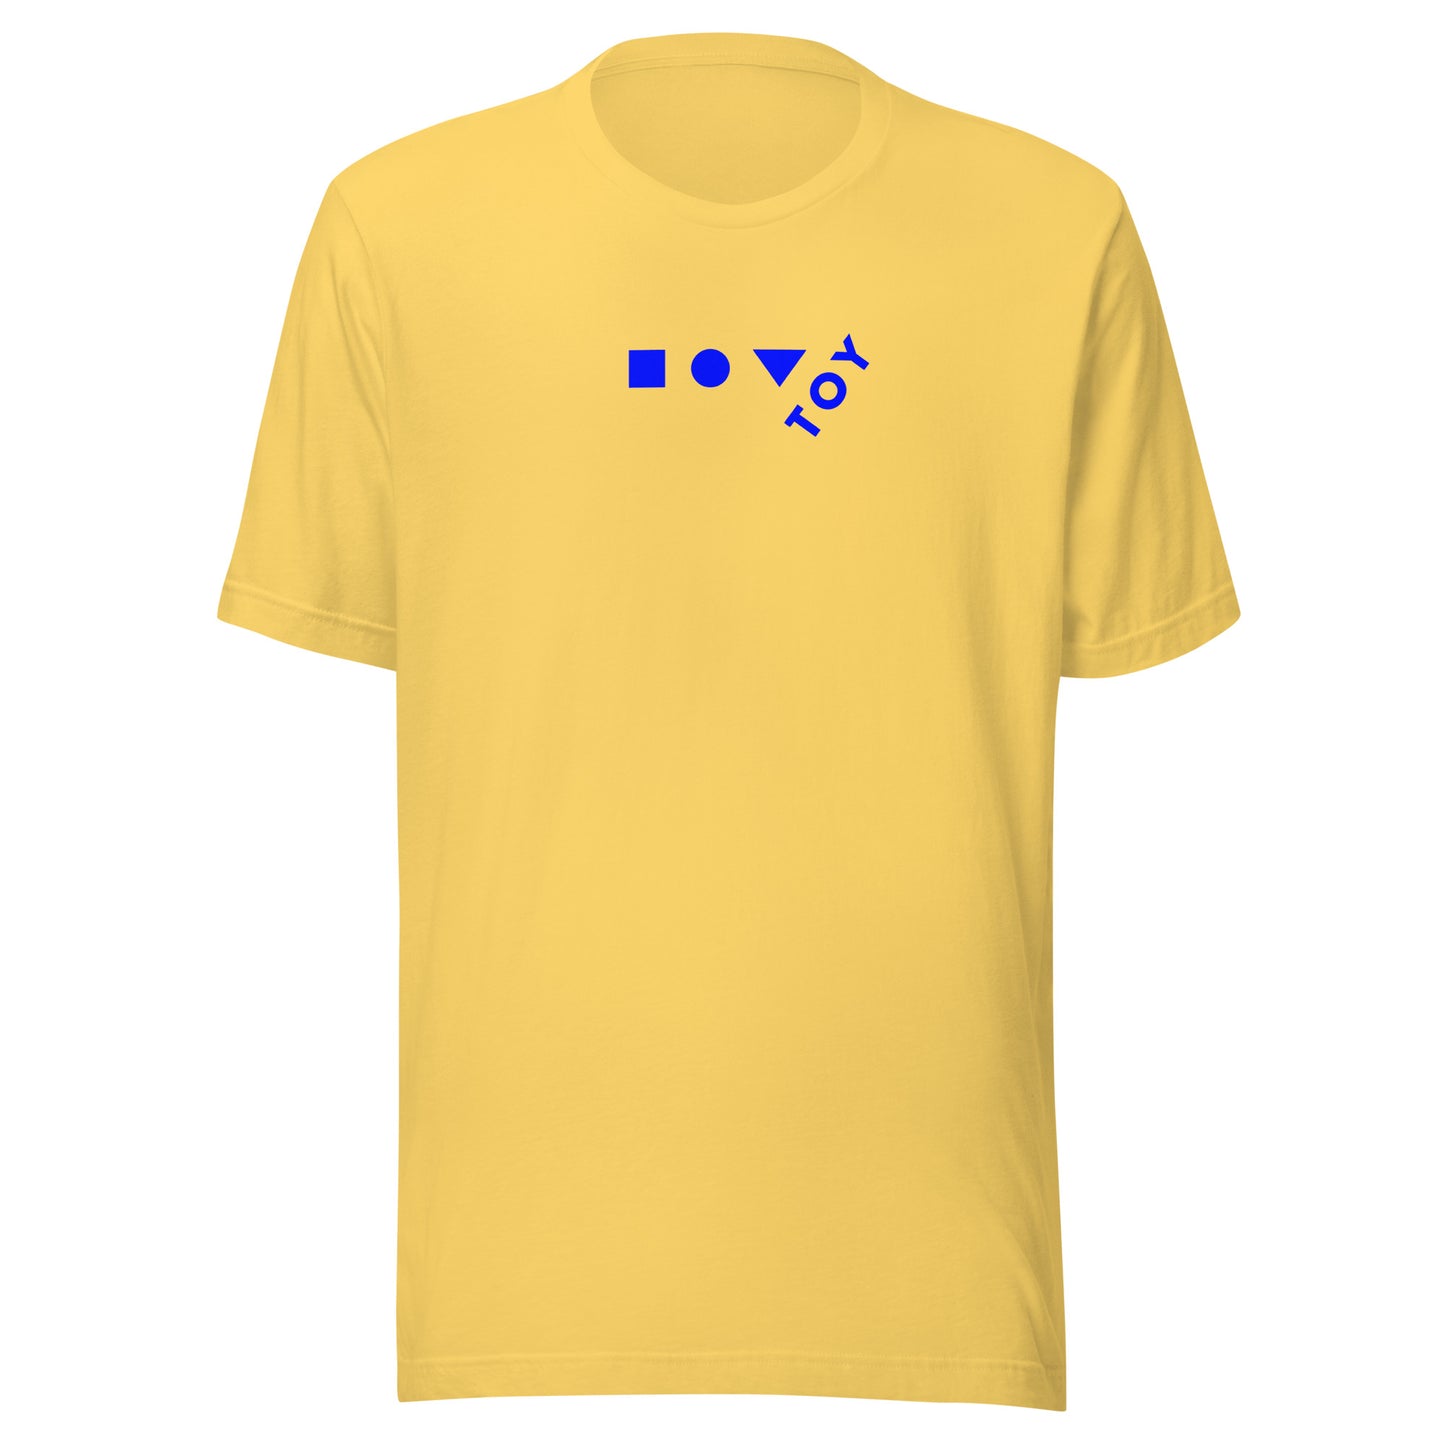 TOY [BLOCK] Series (Bl) Unisex t-shirt